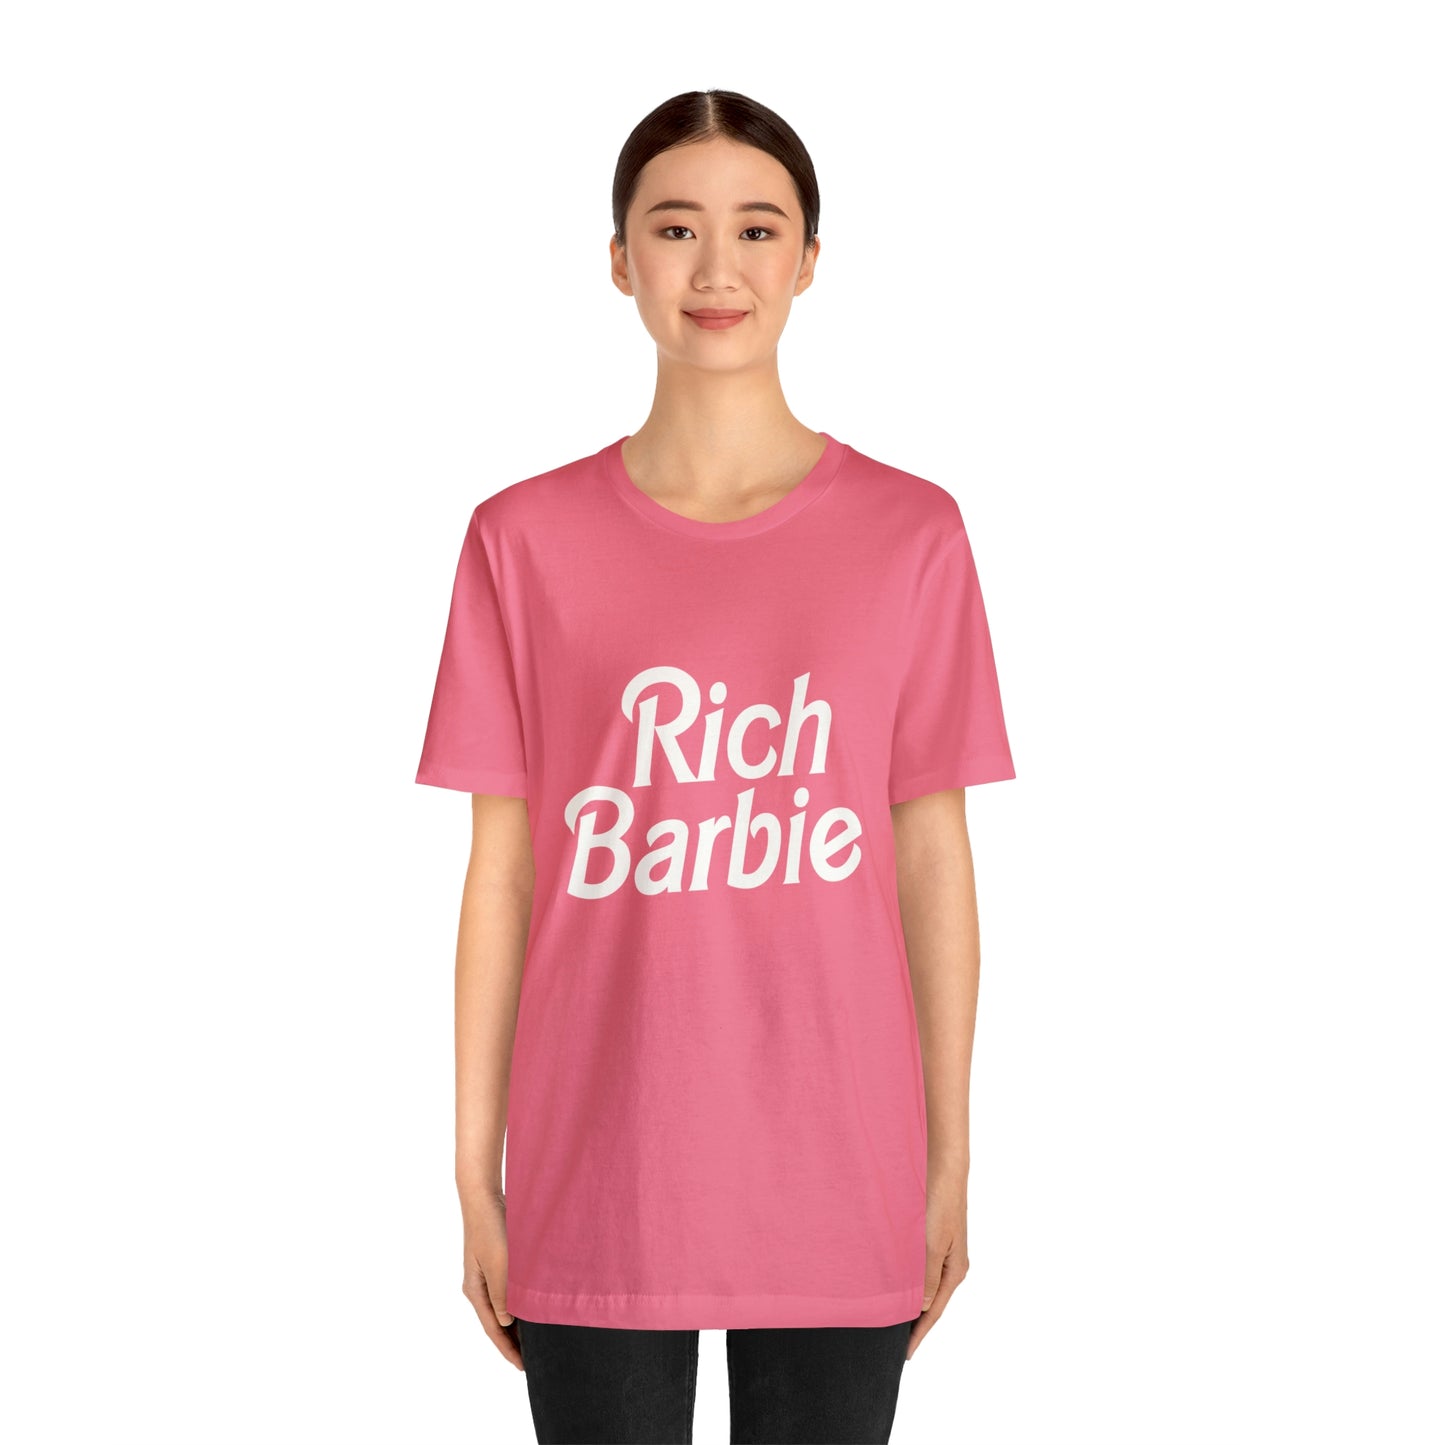 Rich Barbie